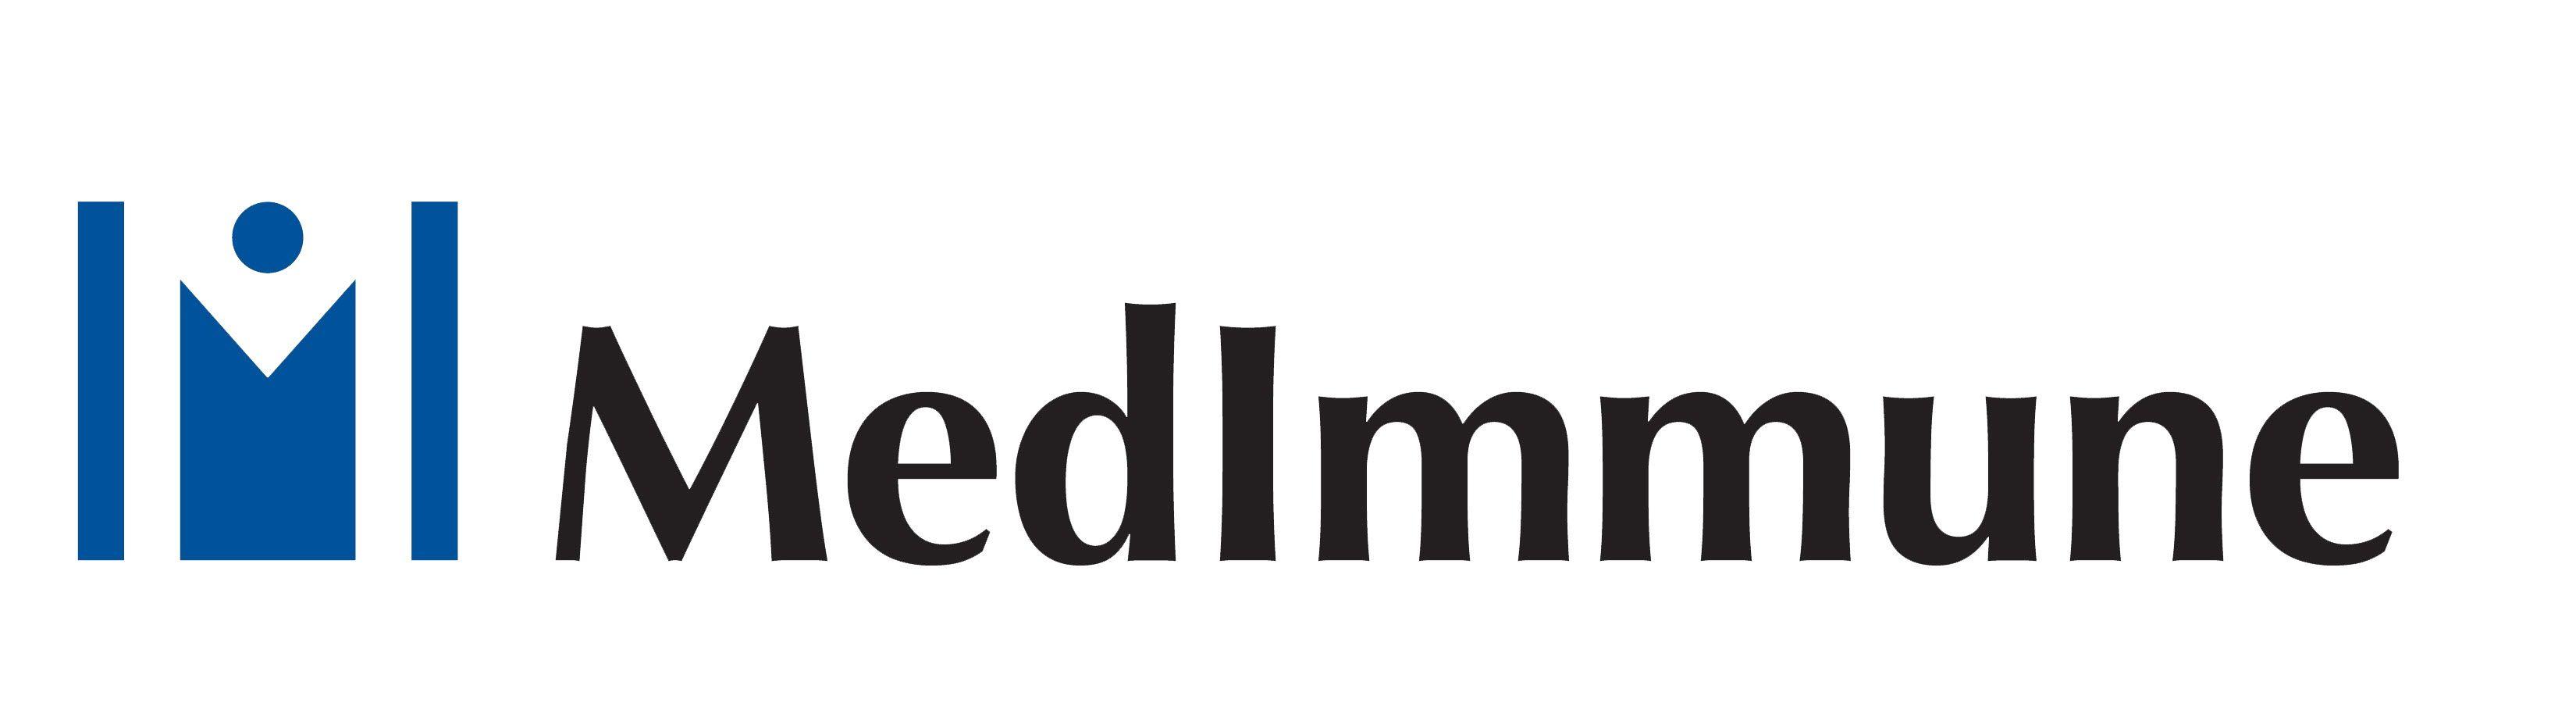 MedImmune Logo - medimmune-logo - BioHealth Capital Region